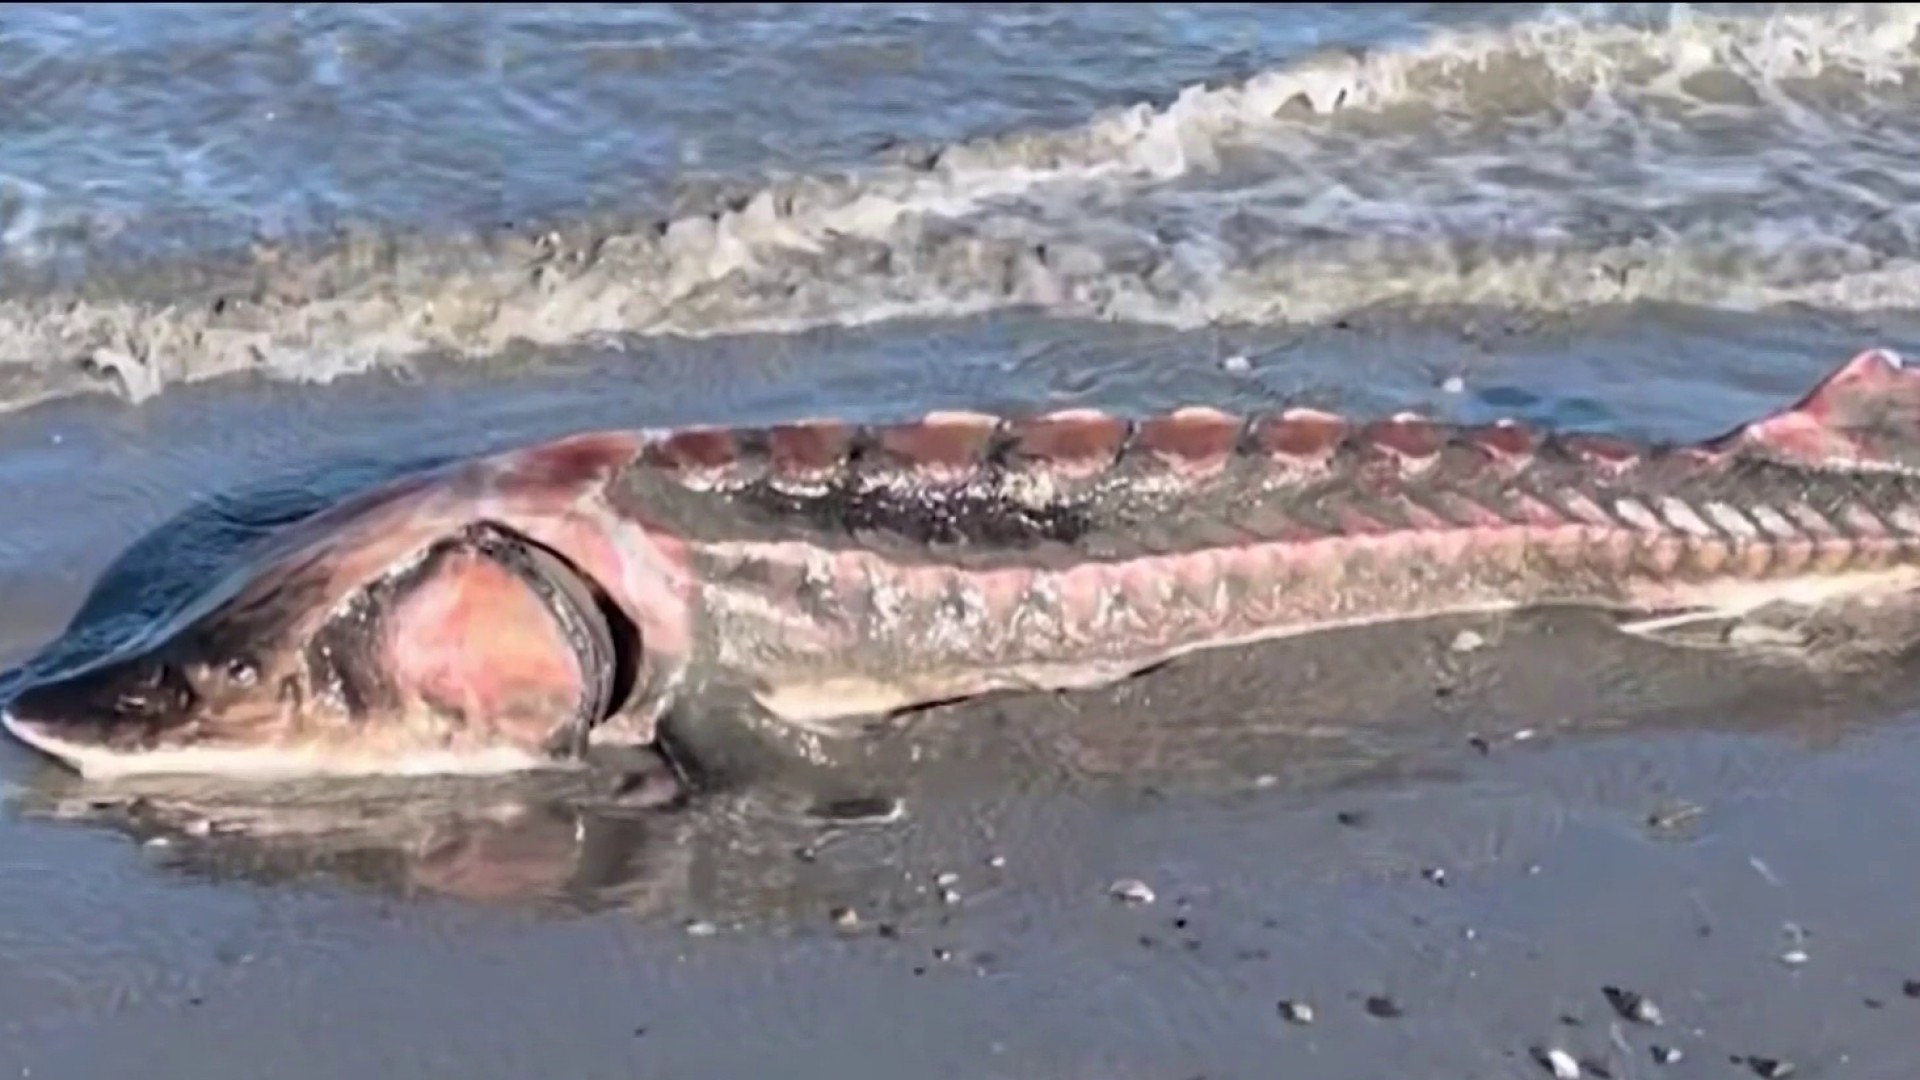 Rare 5-Foot Sturgeon that Looked ‘Prehistoric' Washes Up on
Massachusetts Beach